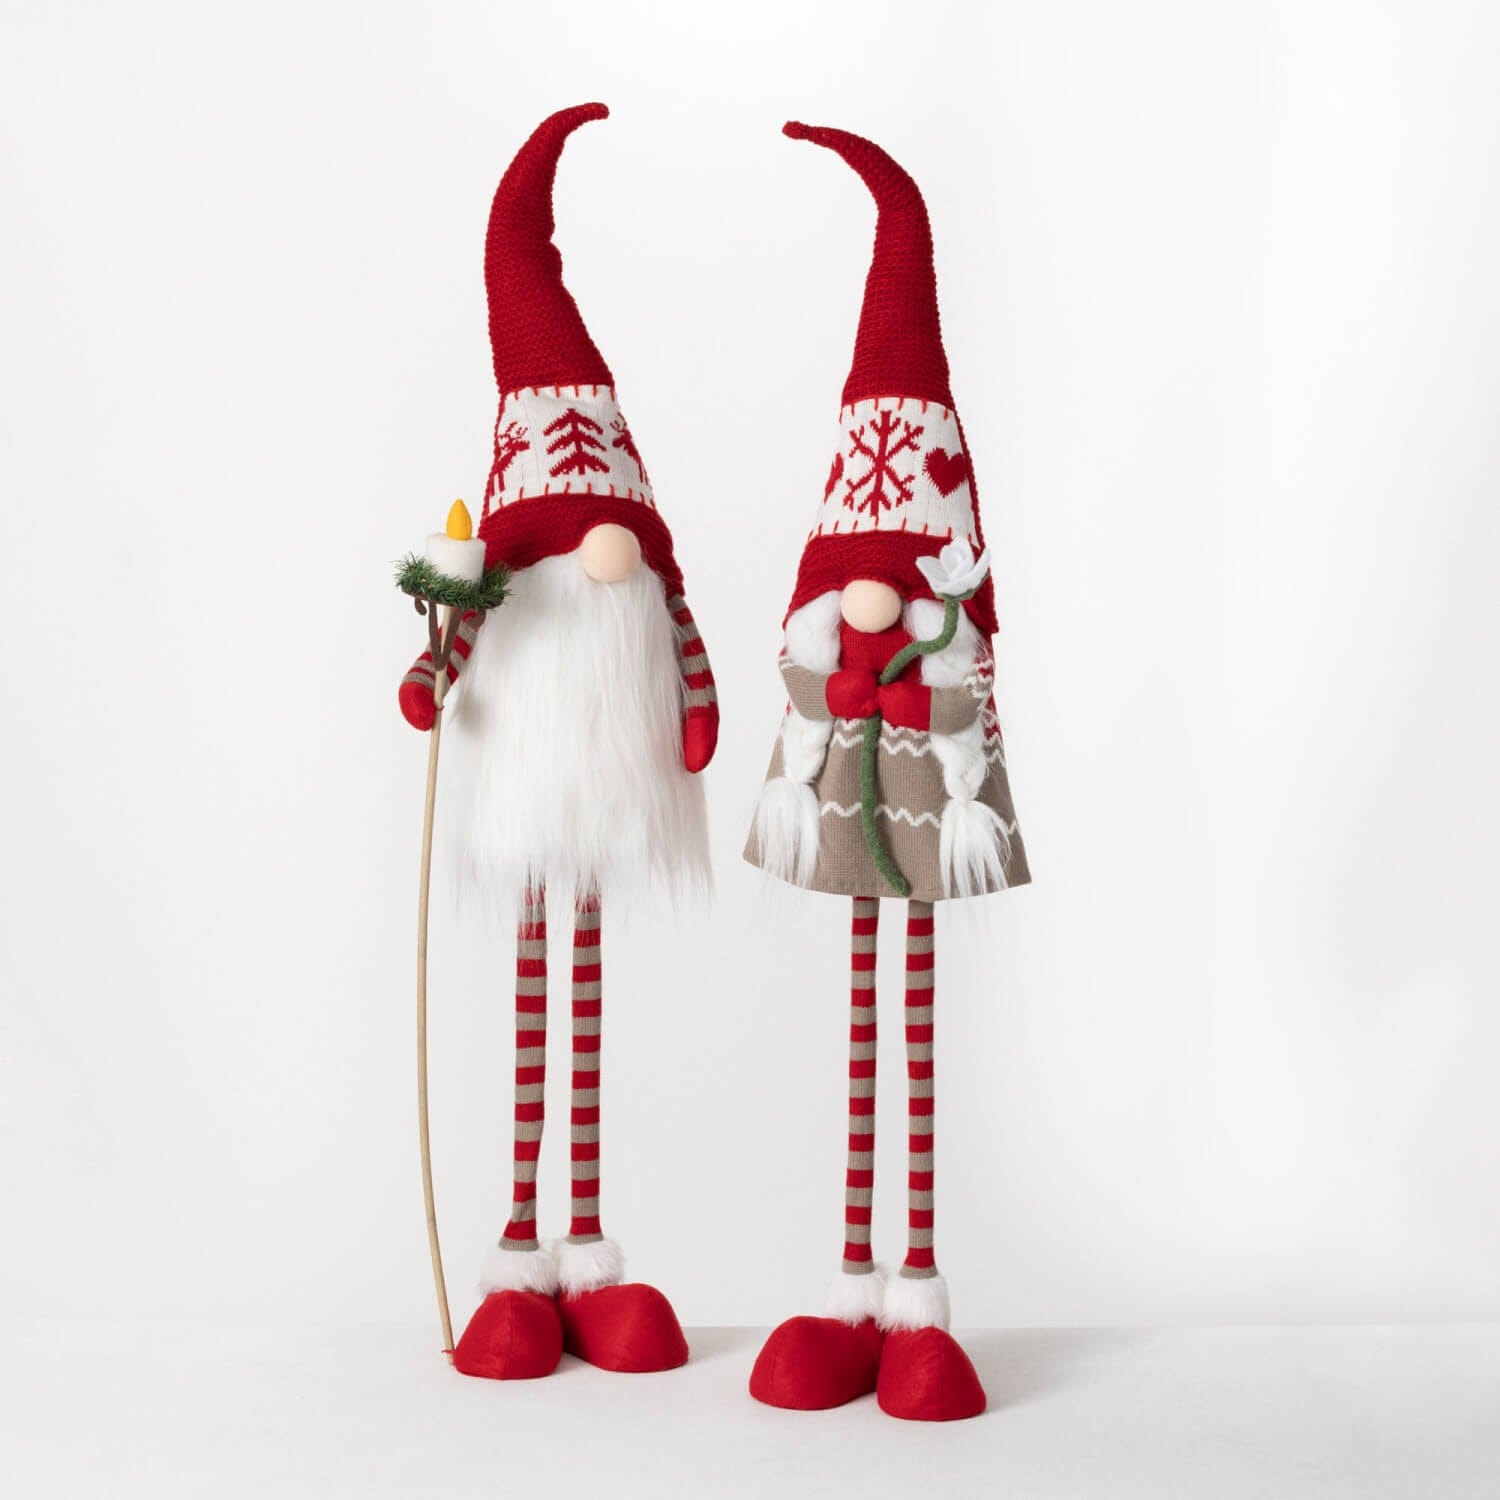 Boy & Girl Gnome Figurines Elevate Home Decor - Figurines